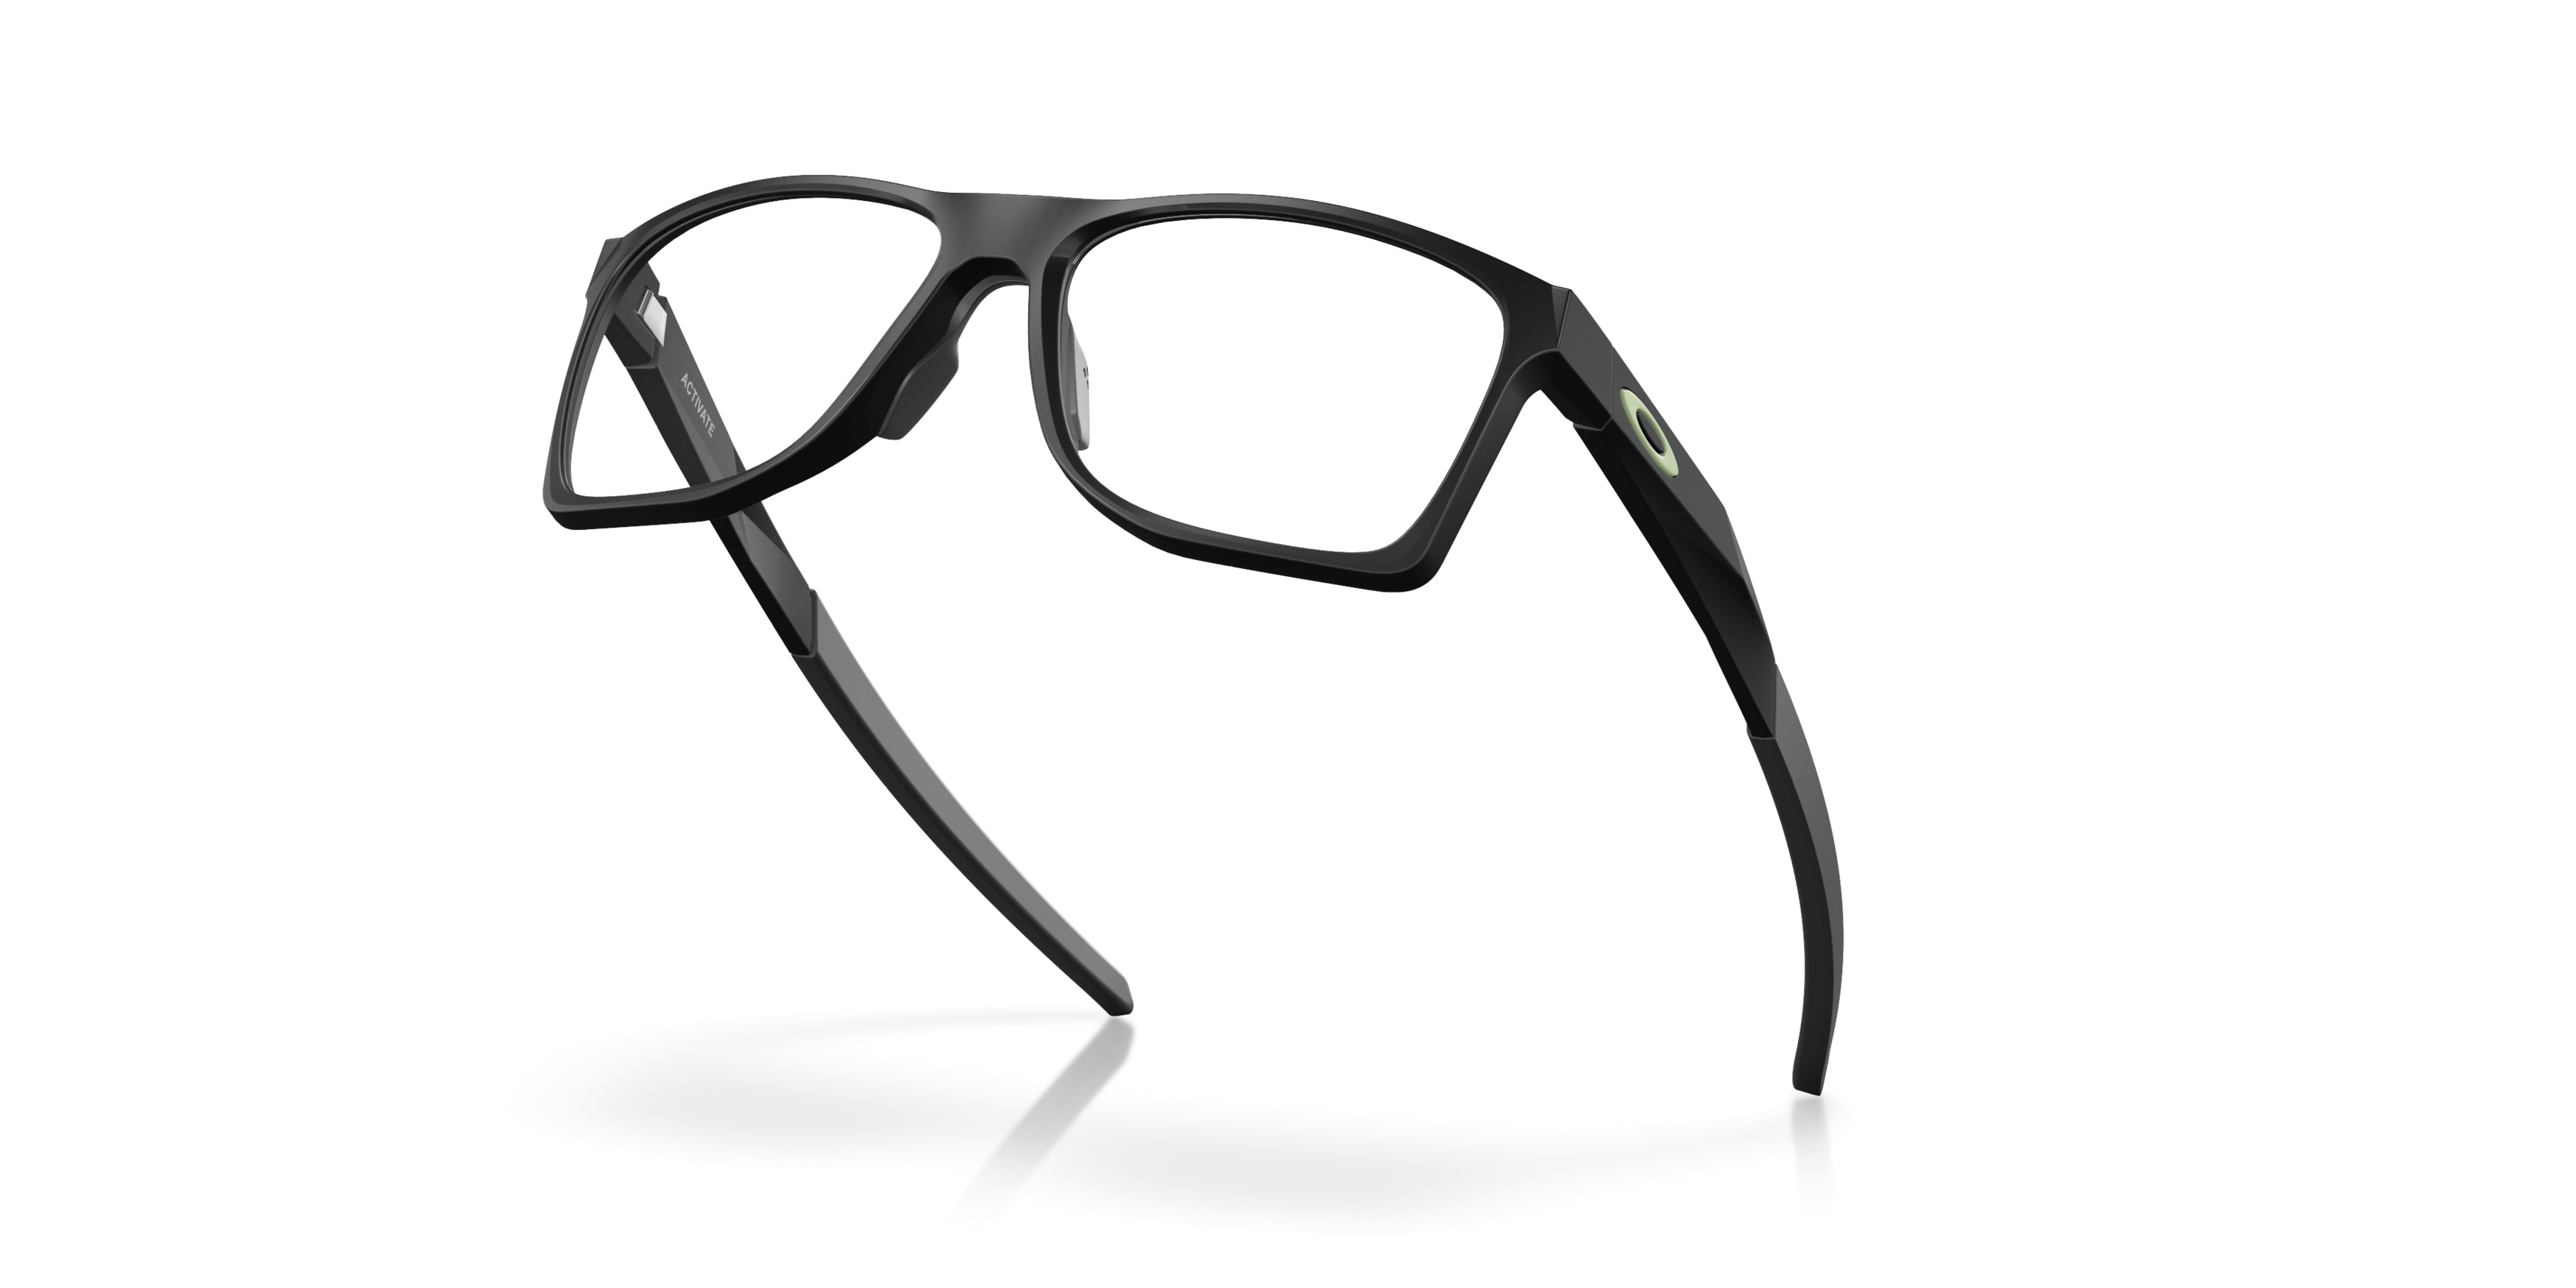 Bottom_Up Oakley OX 8173 Glasses Transparent / transparent, clear